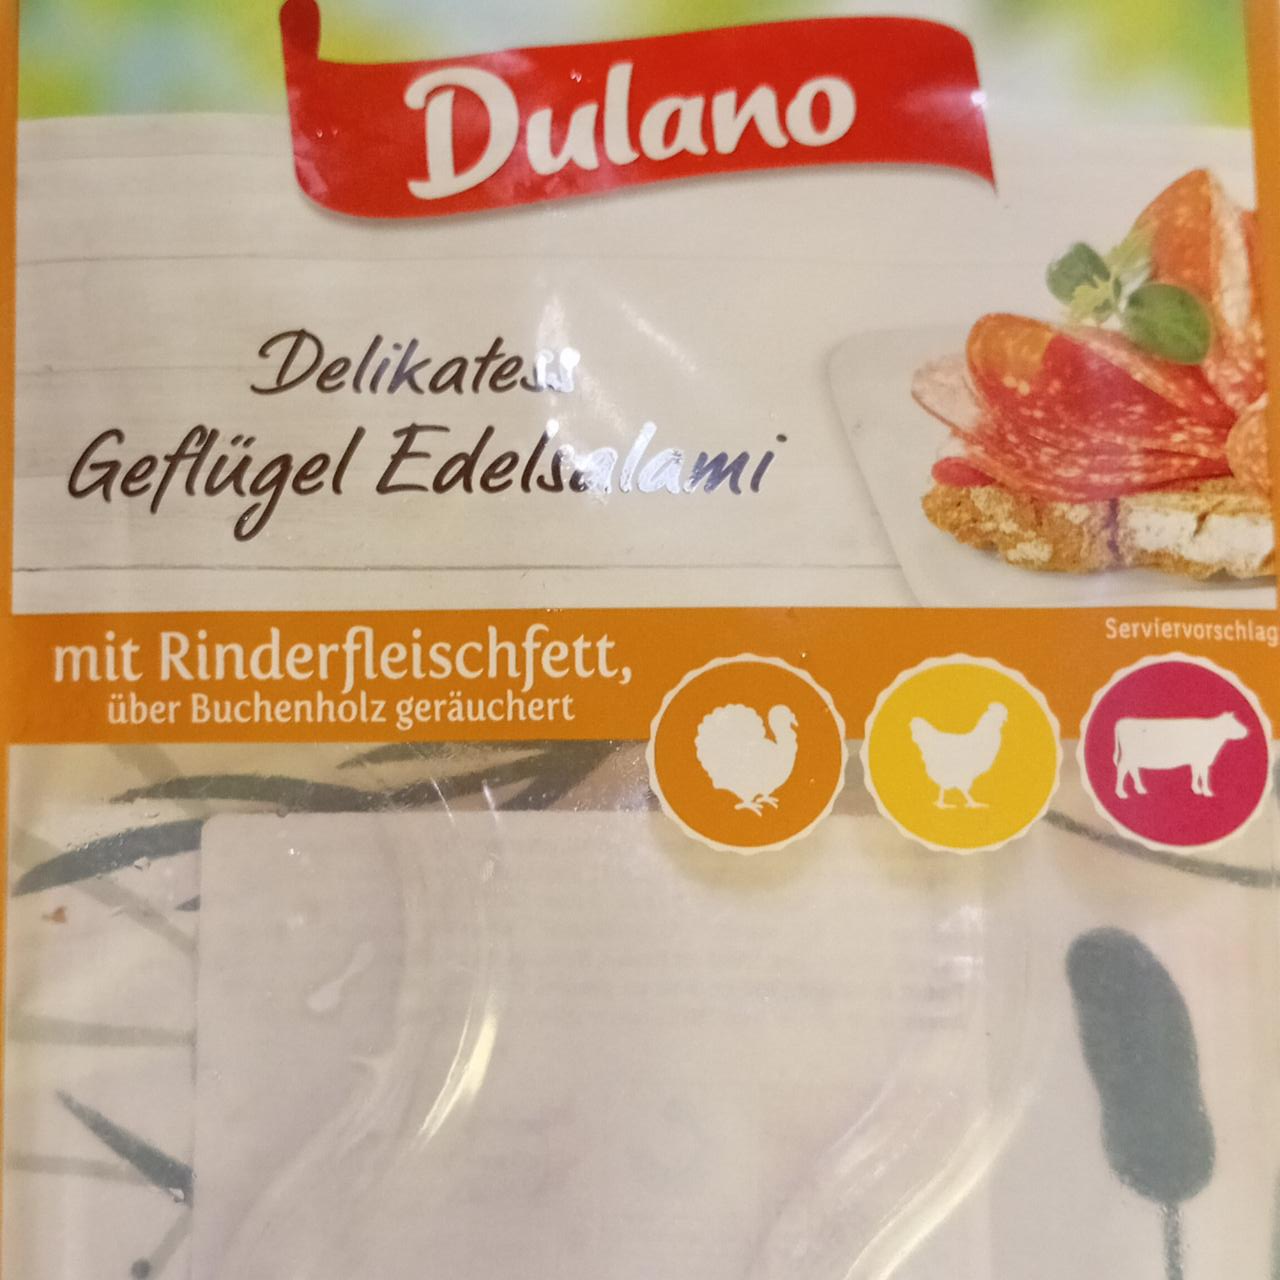 nutriční Dulano kalorie, geräuchert mit Delikatess Rinderfleischfett Edelsalami Geflügel - a kJ hodnoty